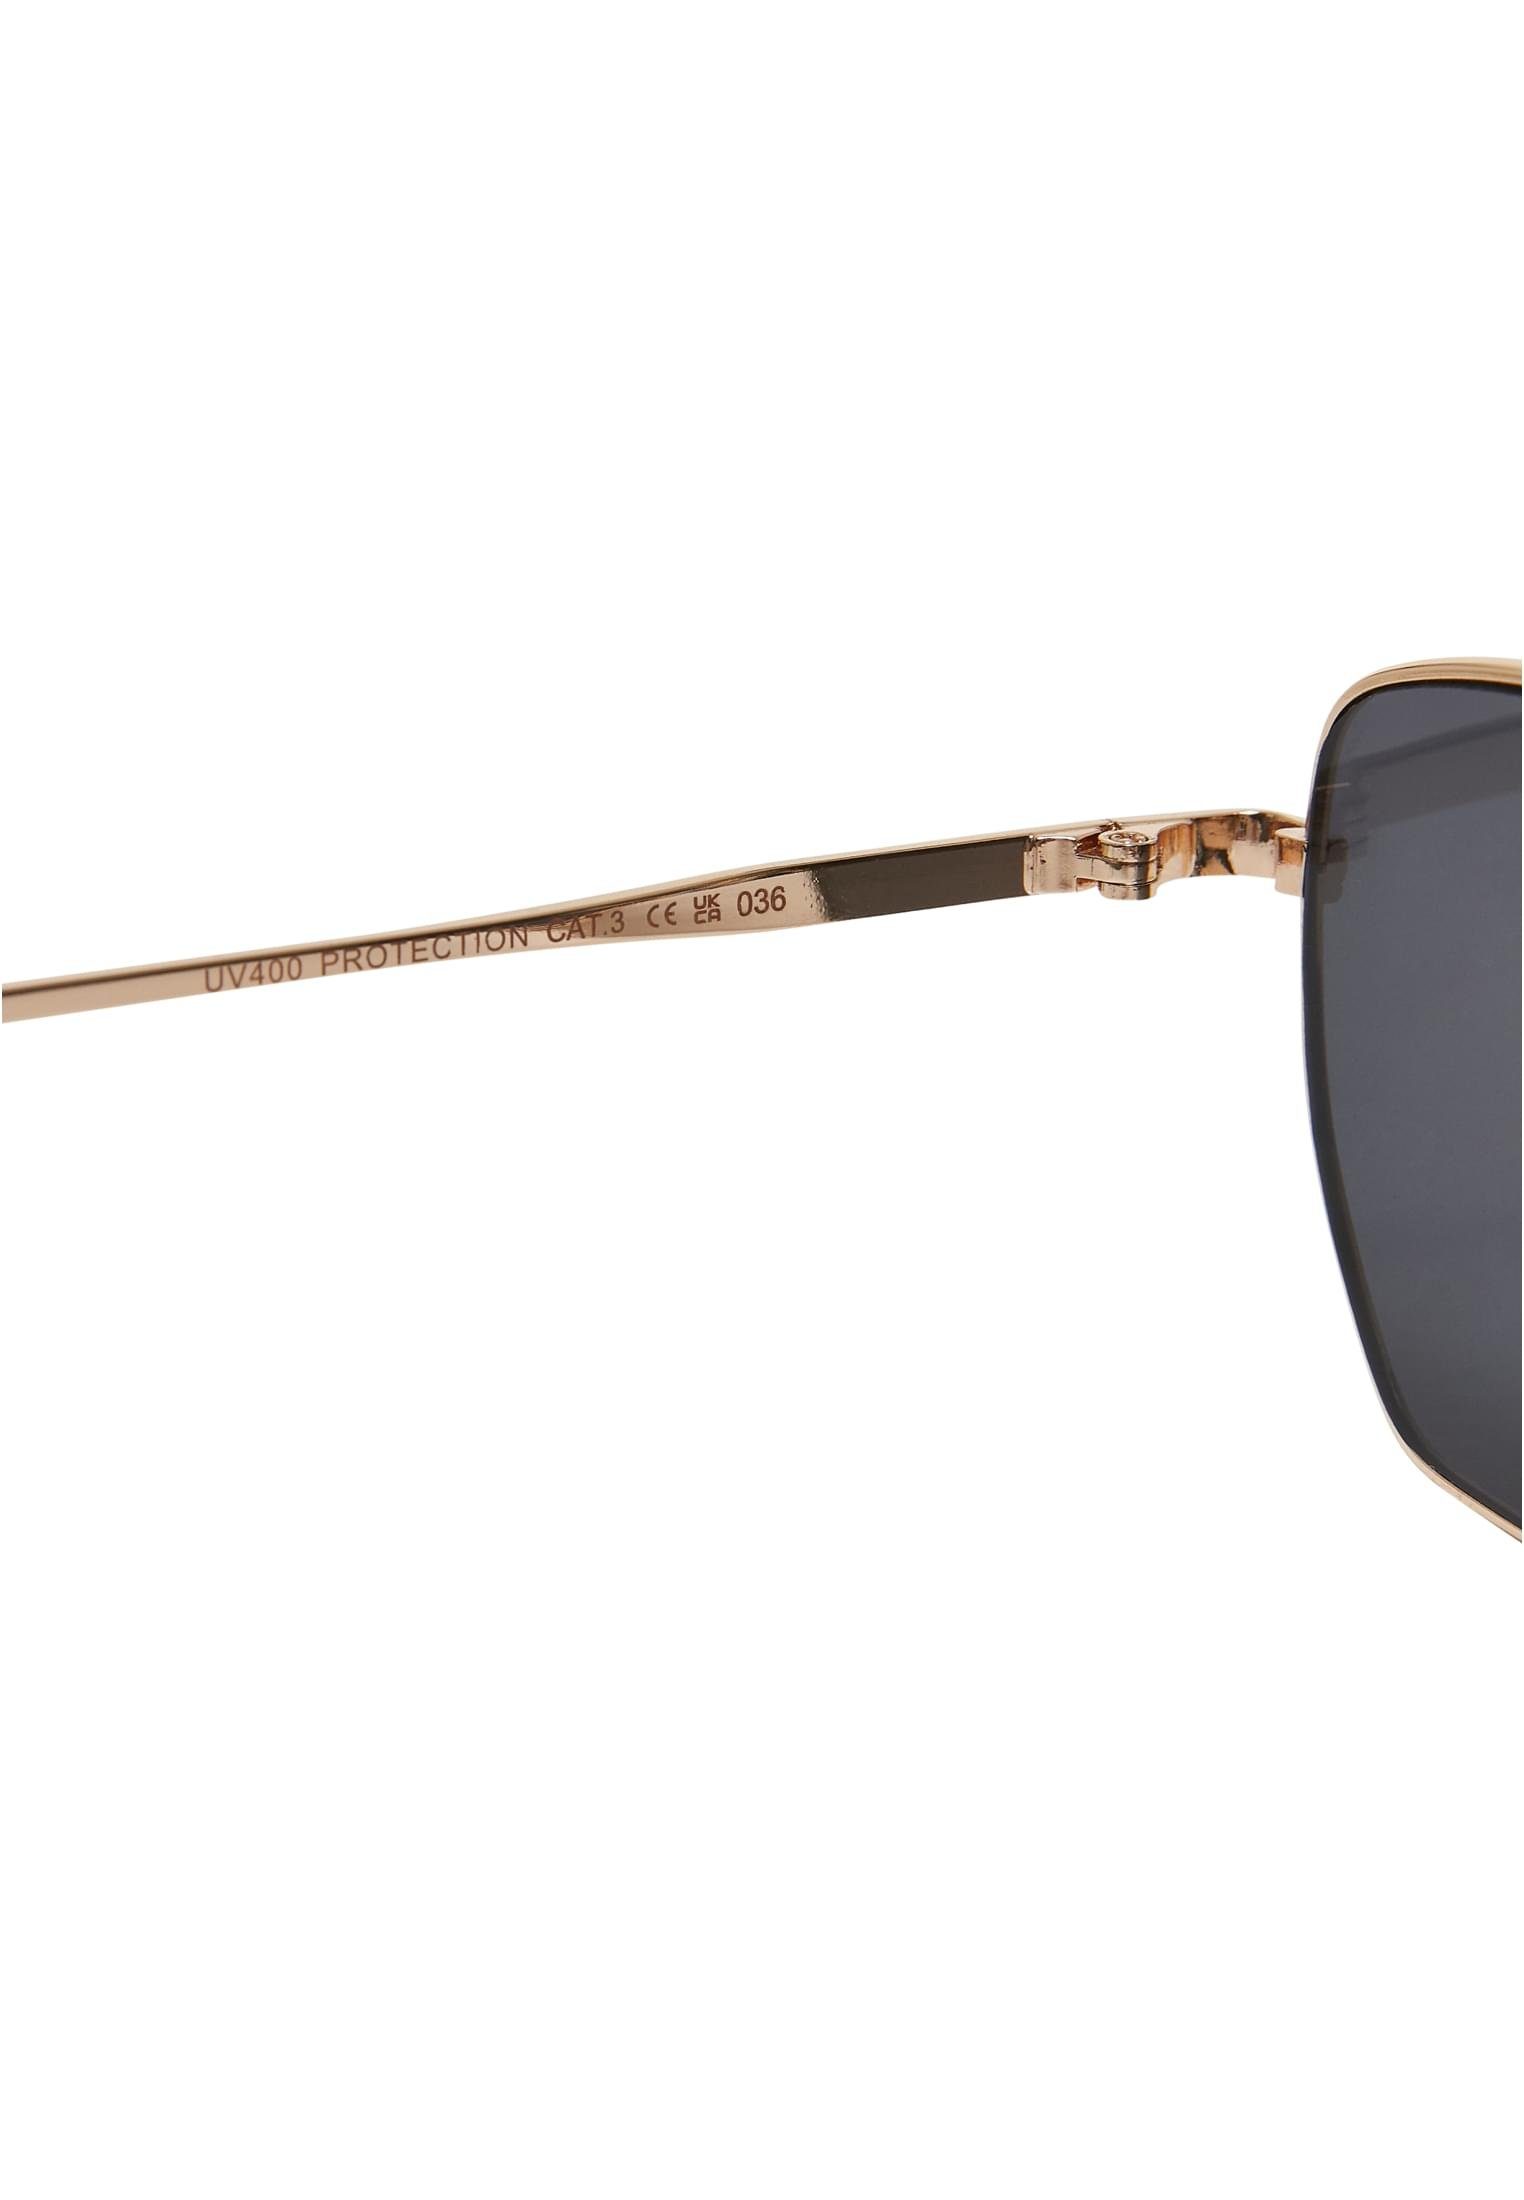 URBAN CLASSICS Sonnenbrille Sunglasses black/gold Denver Unisex